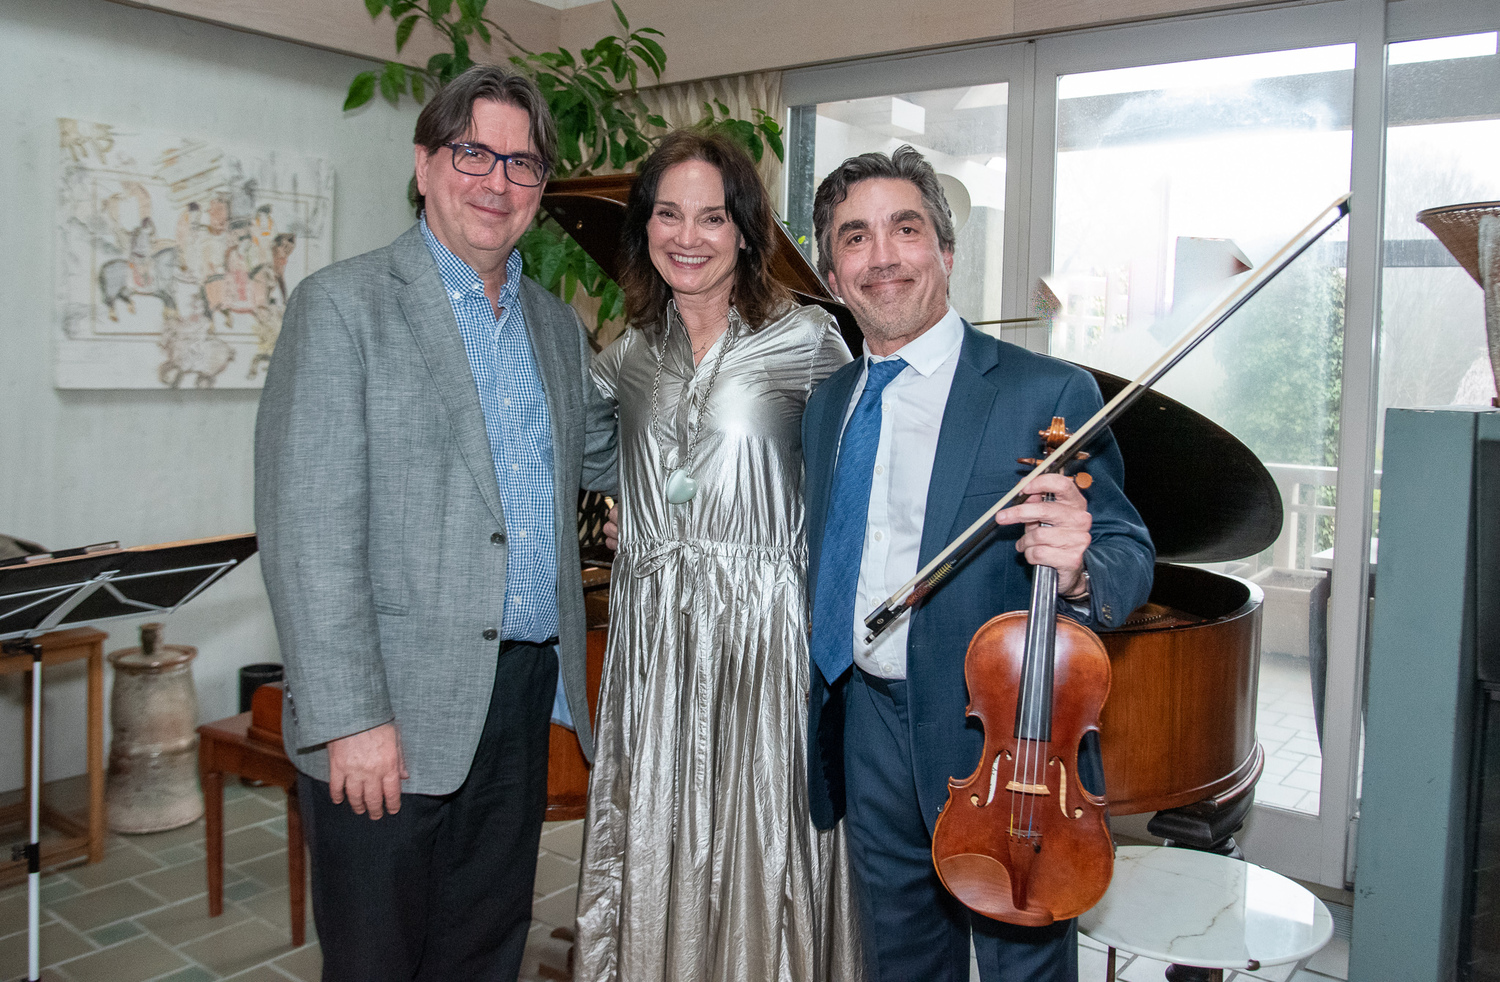 From left, pianist Brandt Fredrickson, LongHouse Reserve Director Carrie Rebora Barratt and violinist Nick Danelson at 